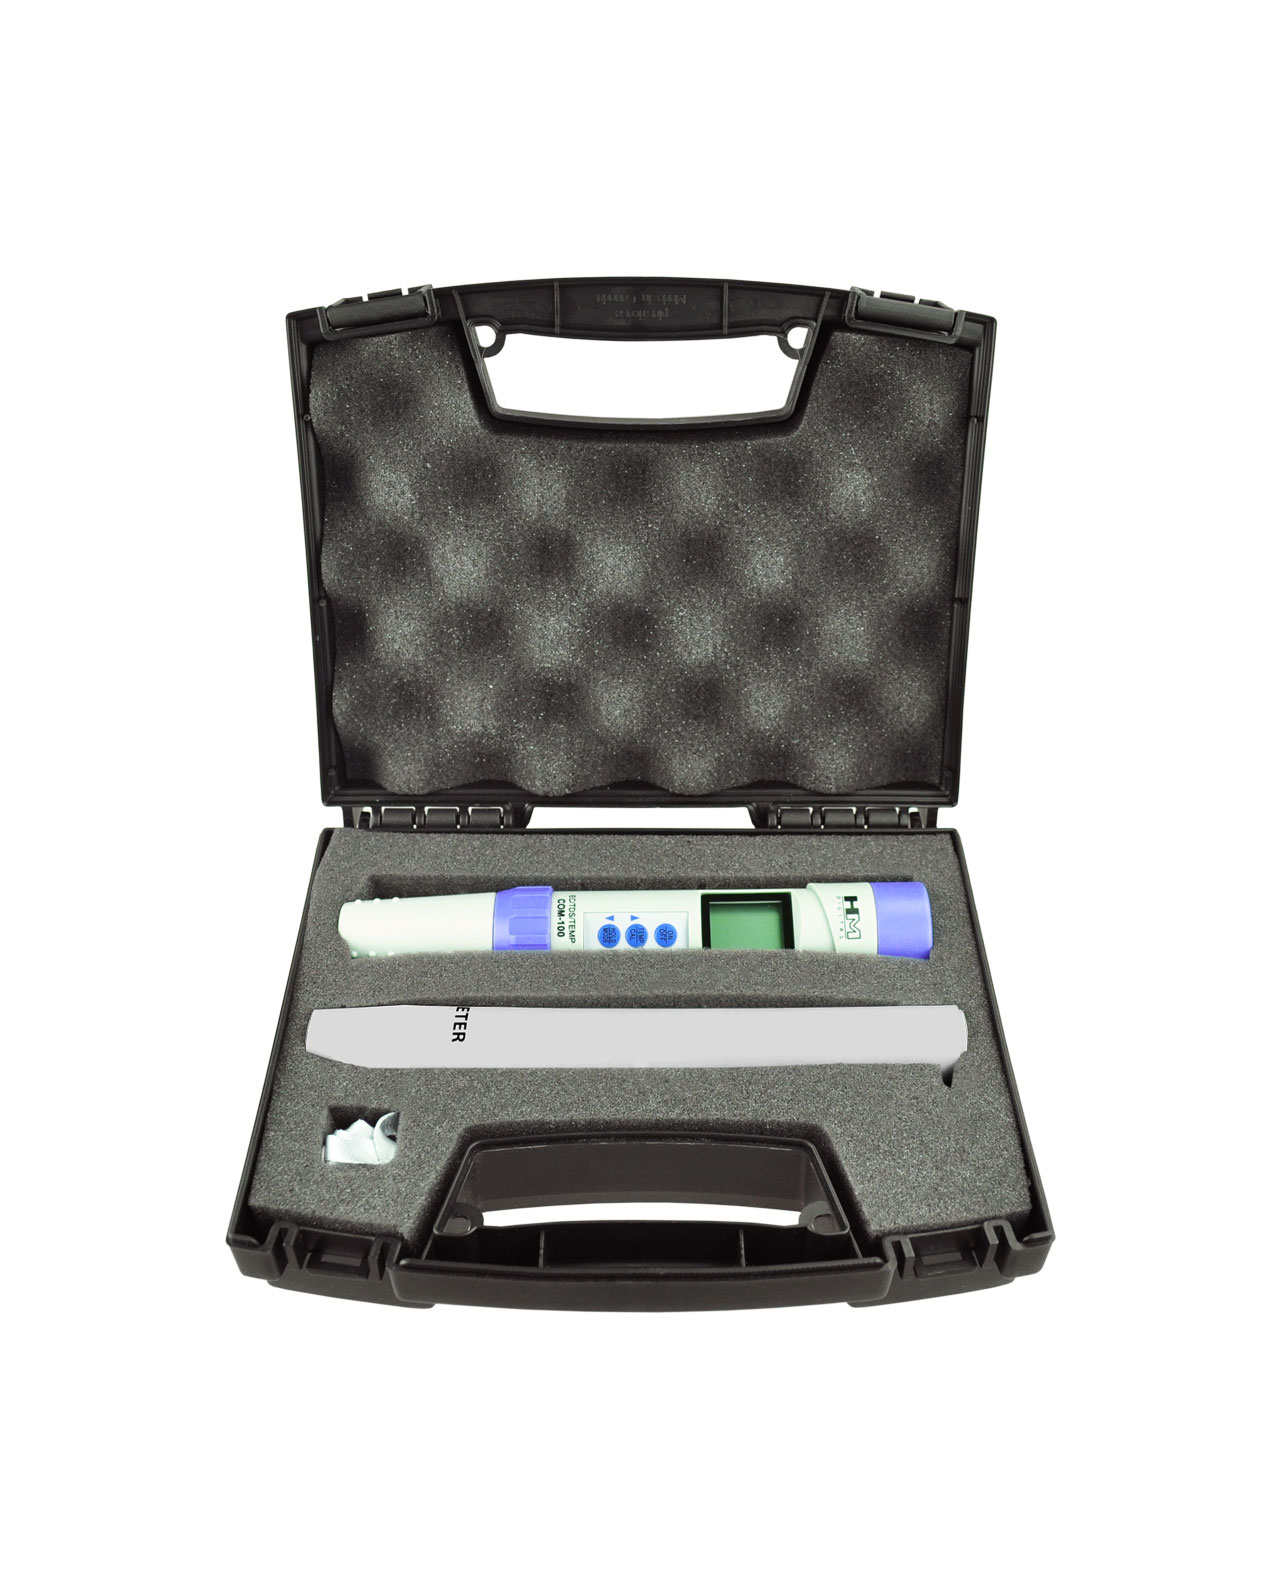 Pro HM Digital EC Meter with Protective Case (Part #: X600-102-EC)